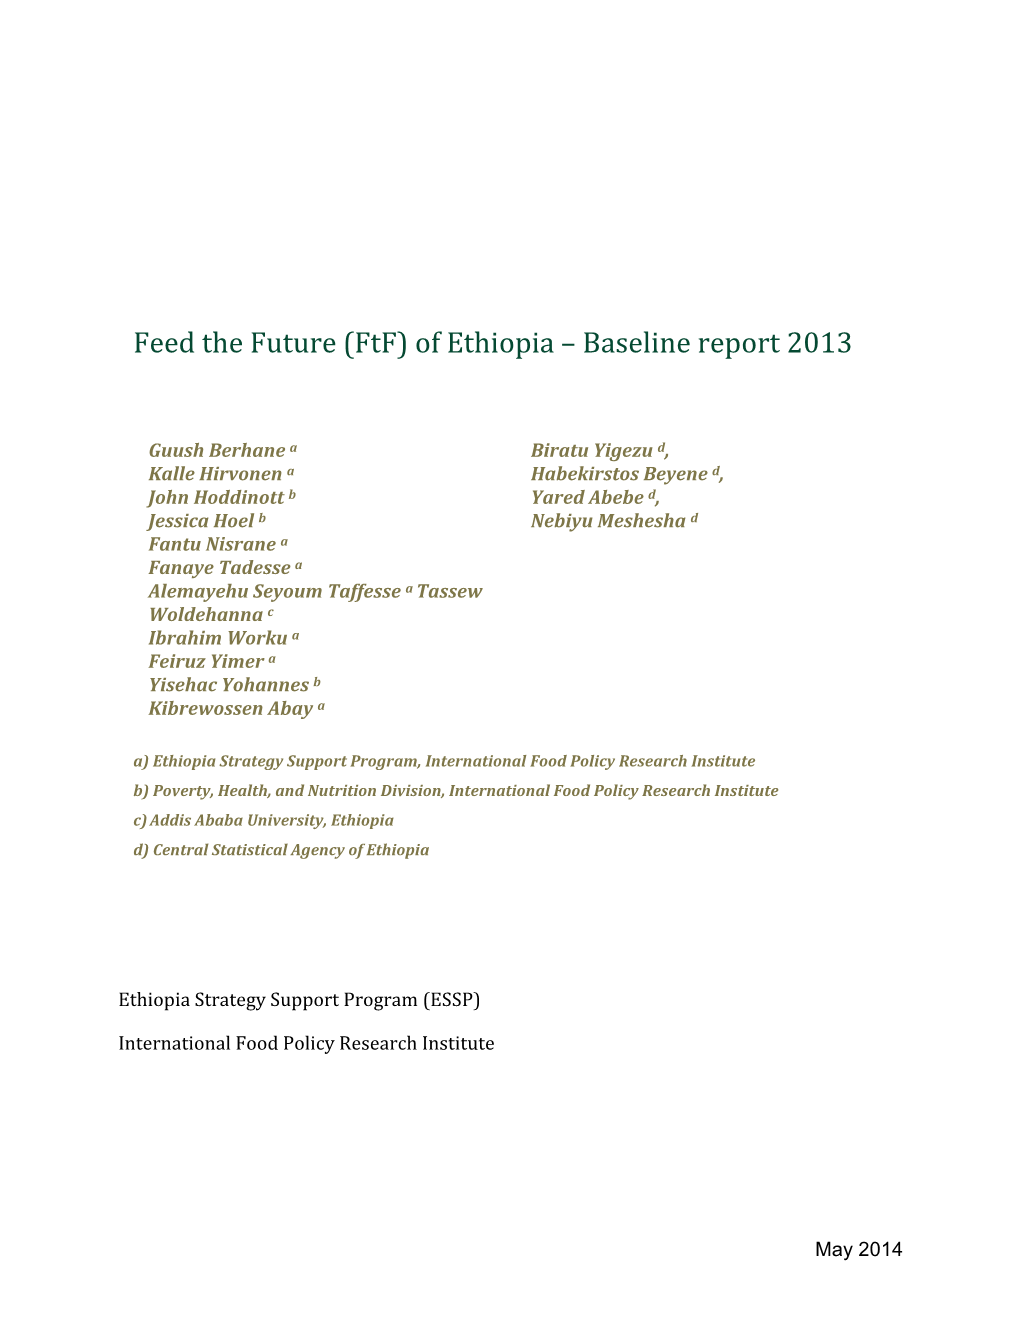 (Ftf) of Ethiopia – Baseline Report 2013